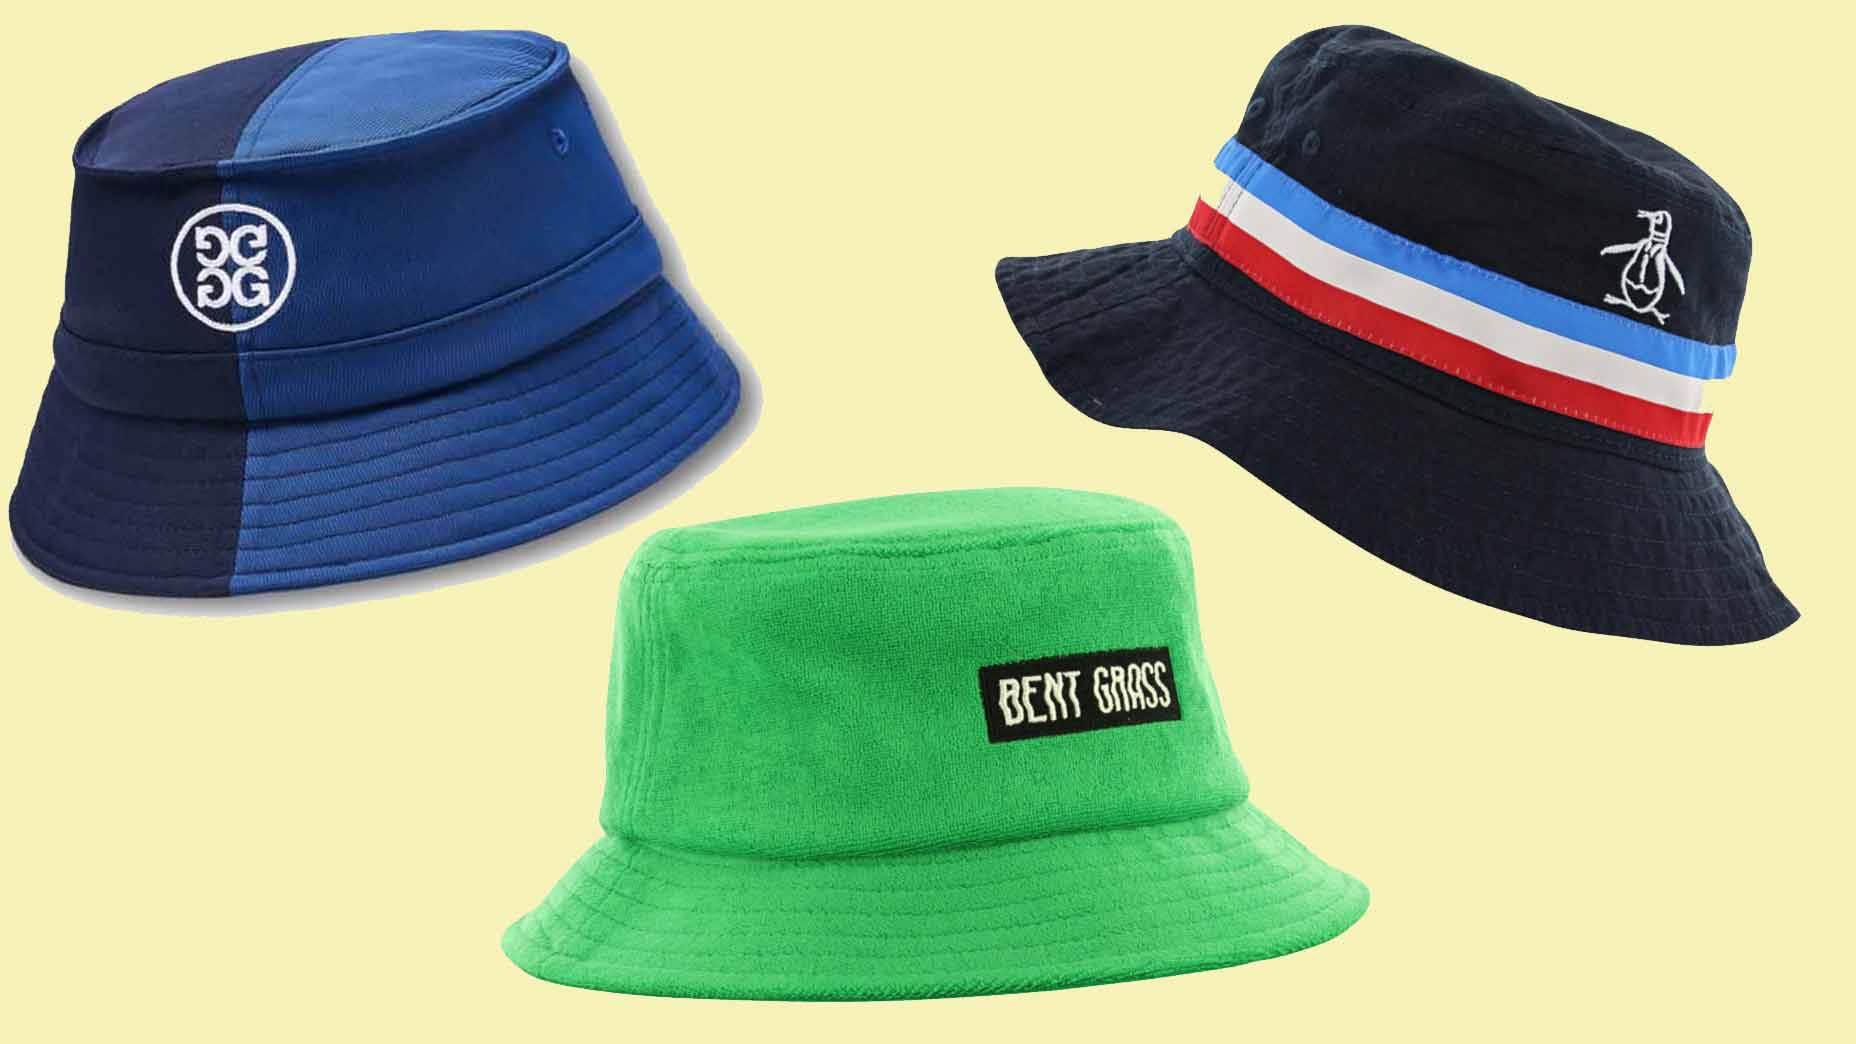 https://golf.com/wp-content/uploads/2021/01/Bucket-hats.jpg